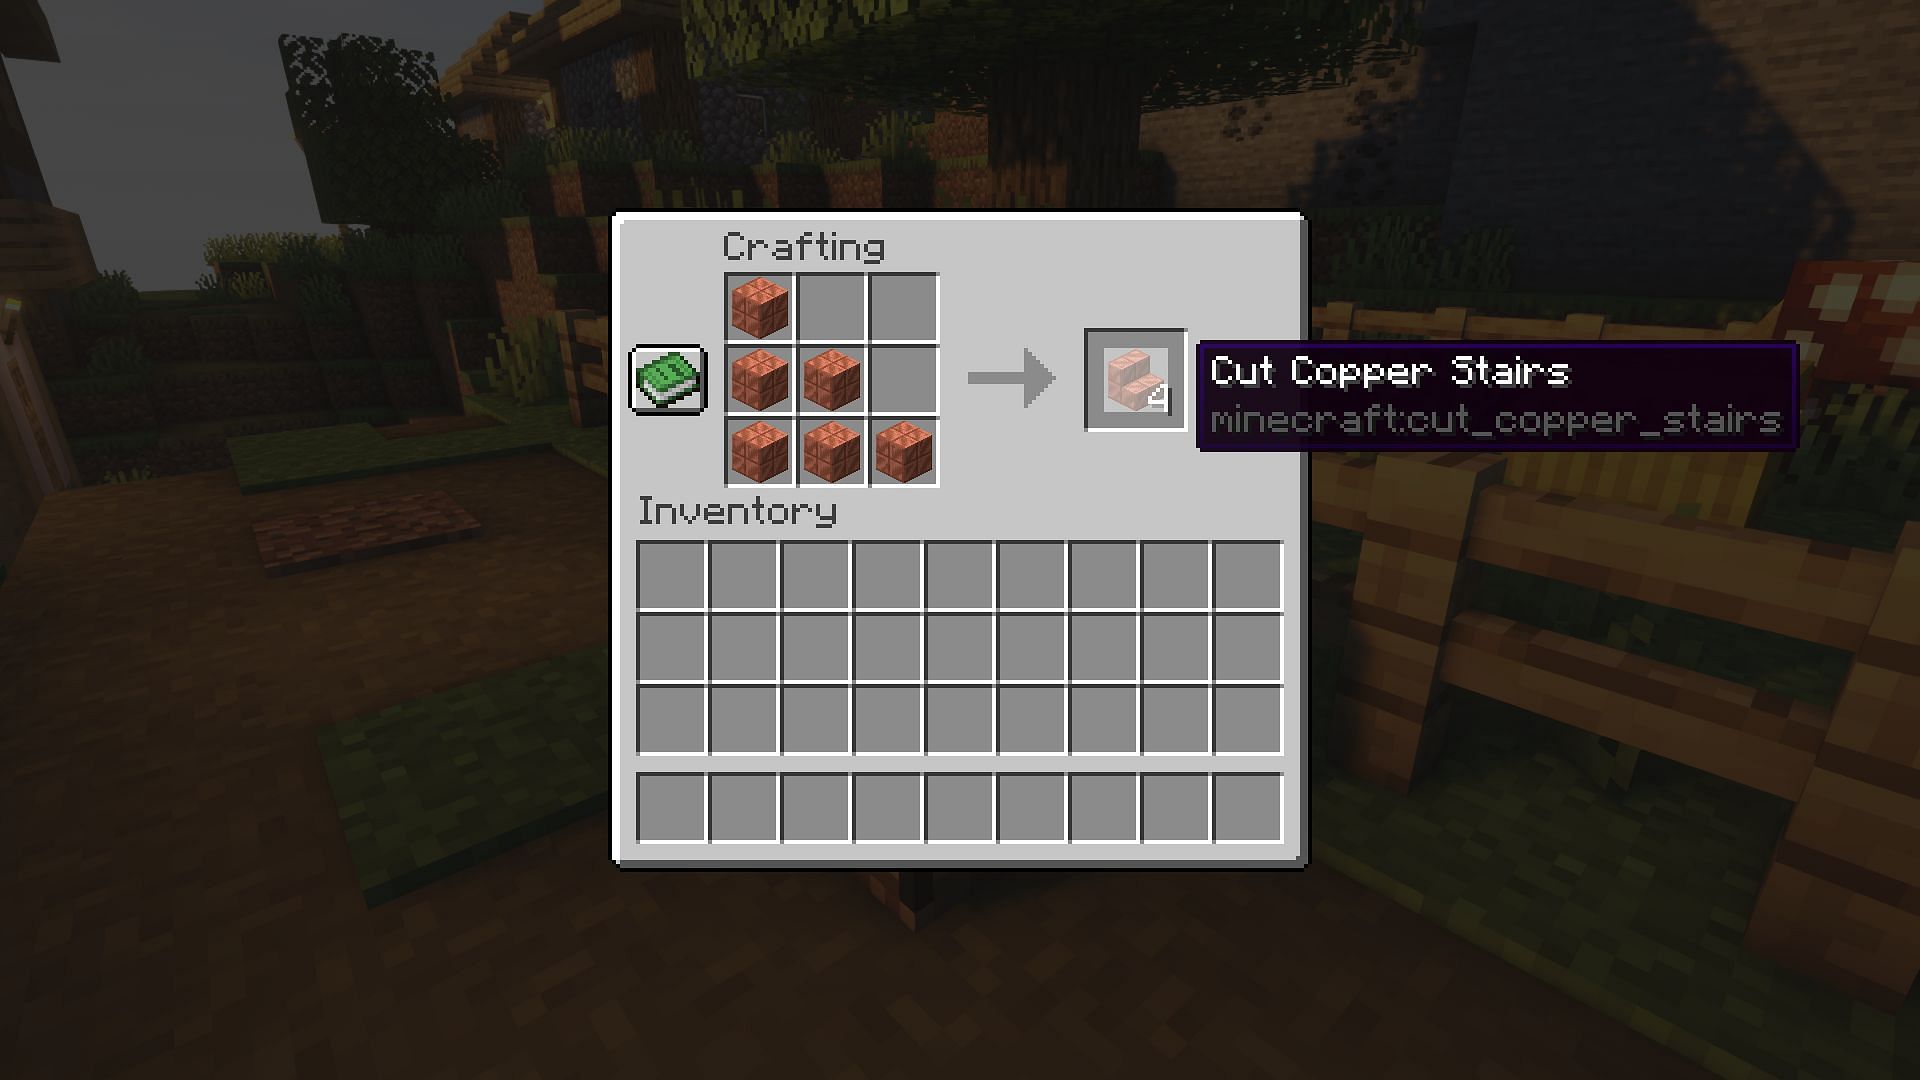 Cut copper stairs crafting recipe (Image via Mojang)